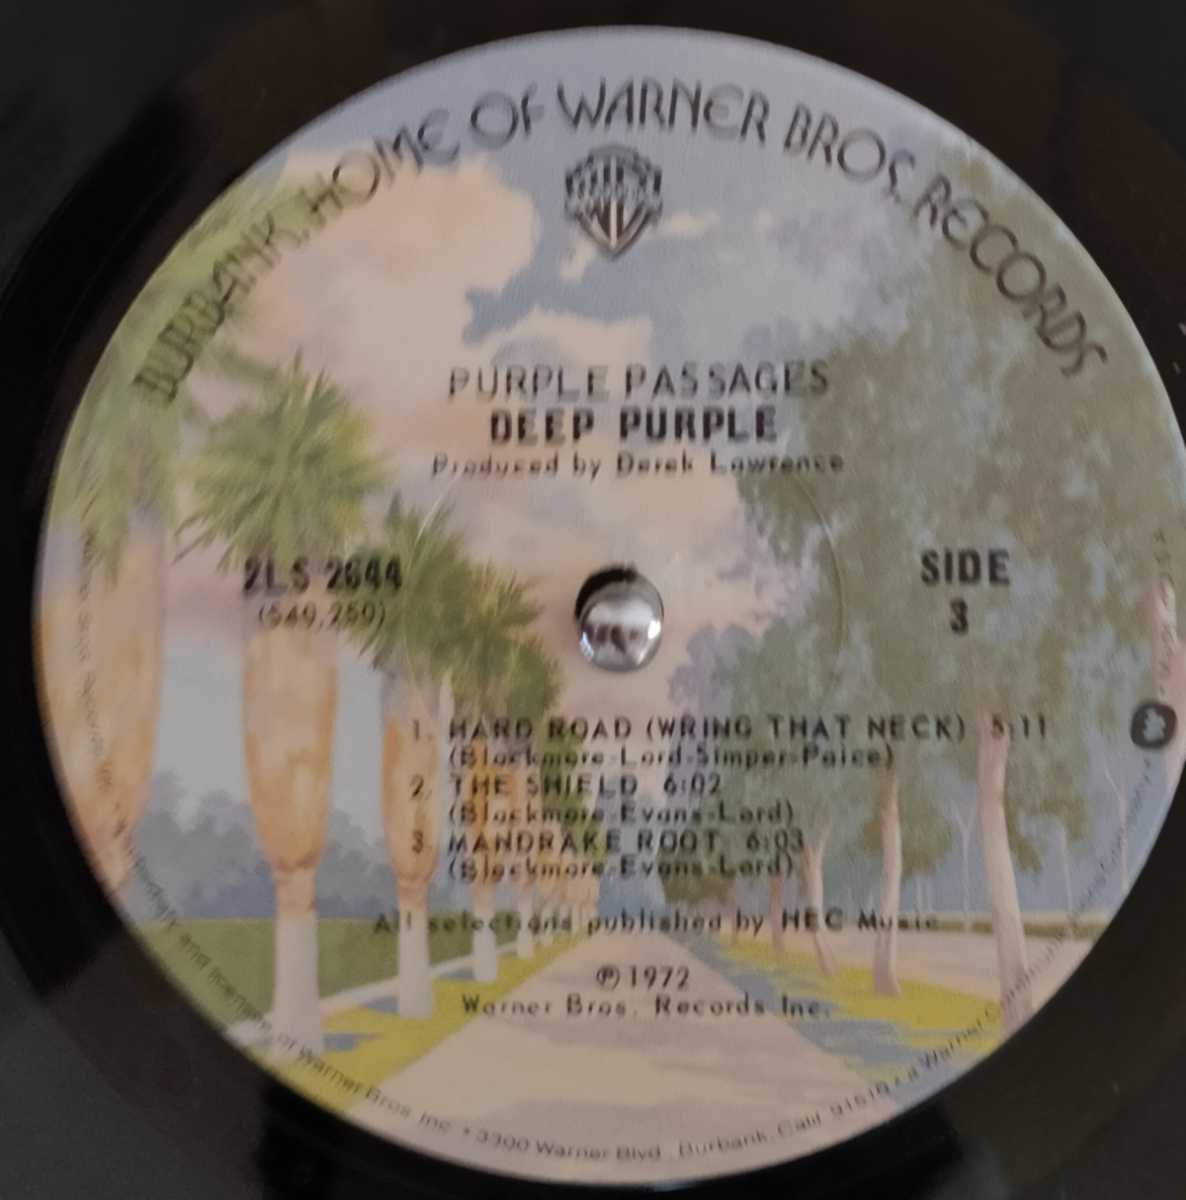 US盤 Deep Purple Purple passages 2LS2644 2枚組 収録順番ミス レコード_画像10